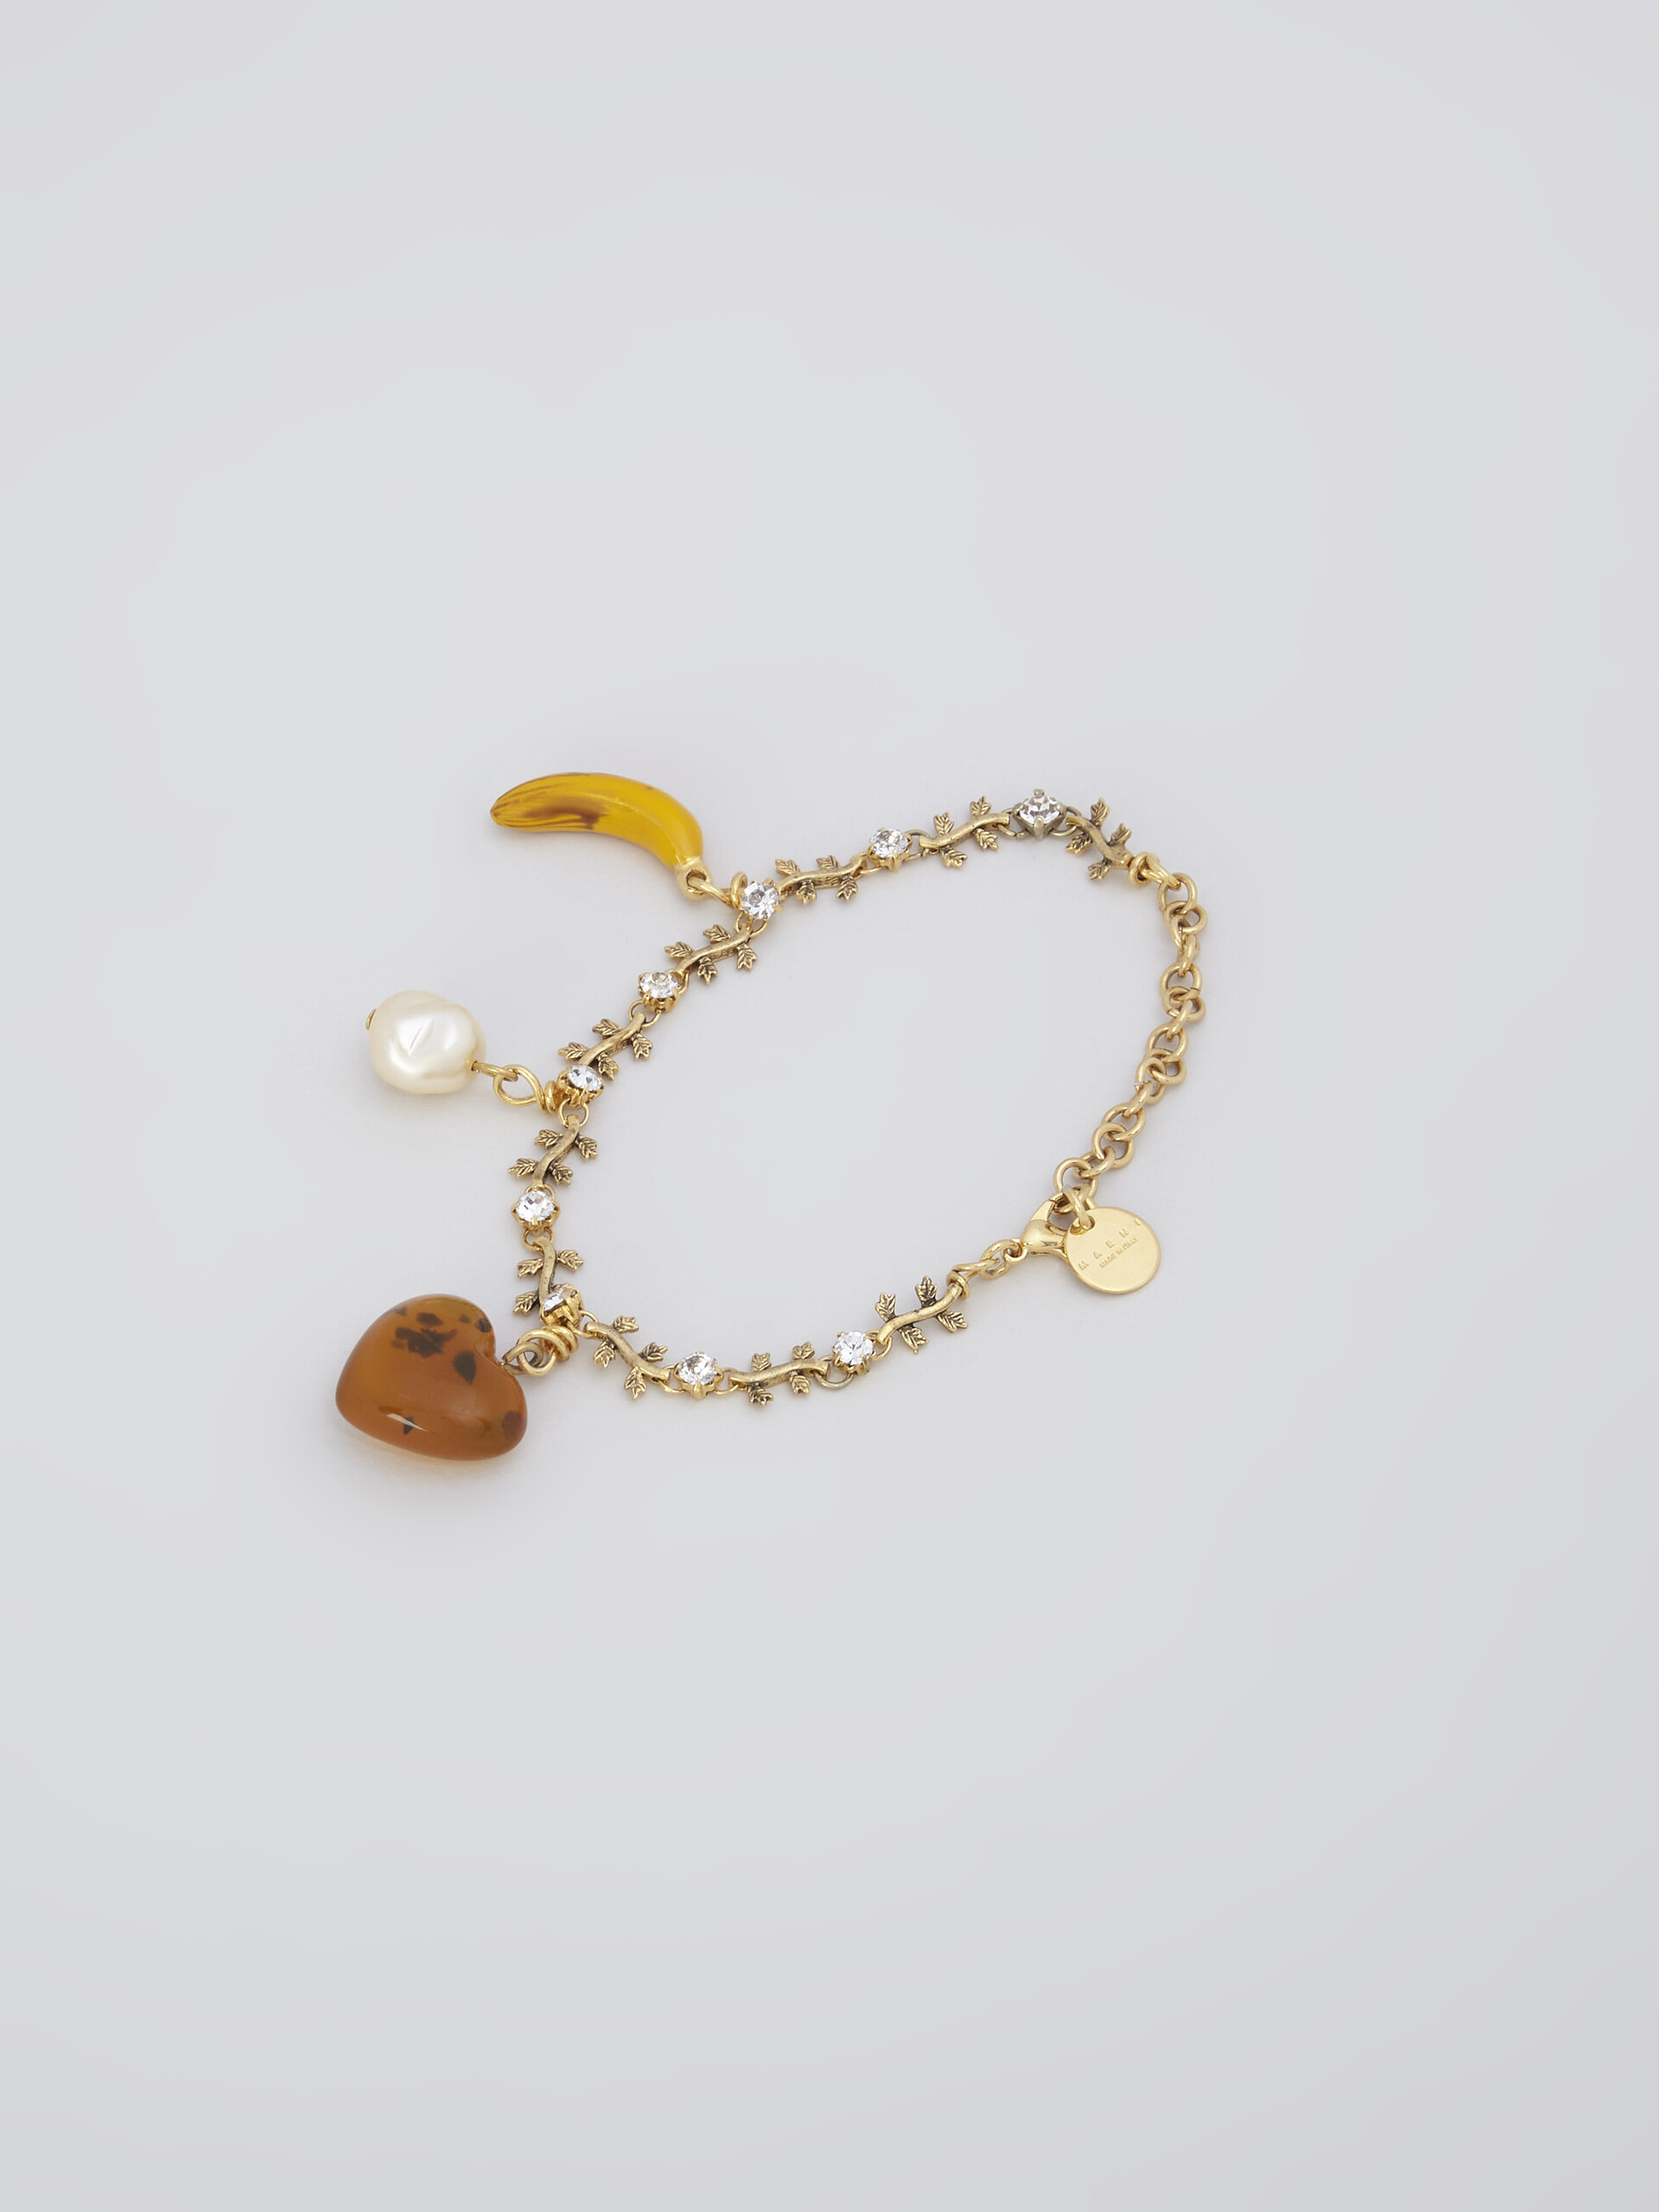 Brass glass and resin FOUND TREASURES bracelet - Bracelets - Image 3